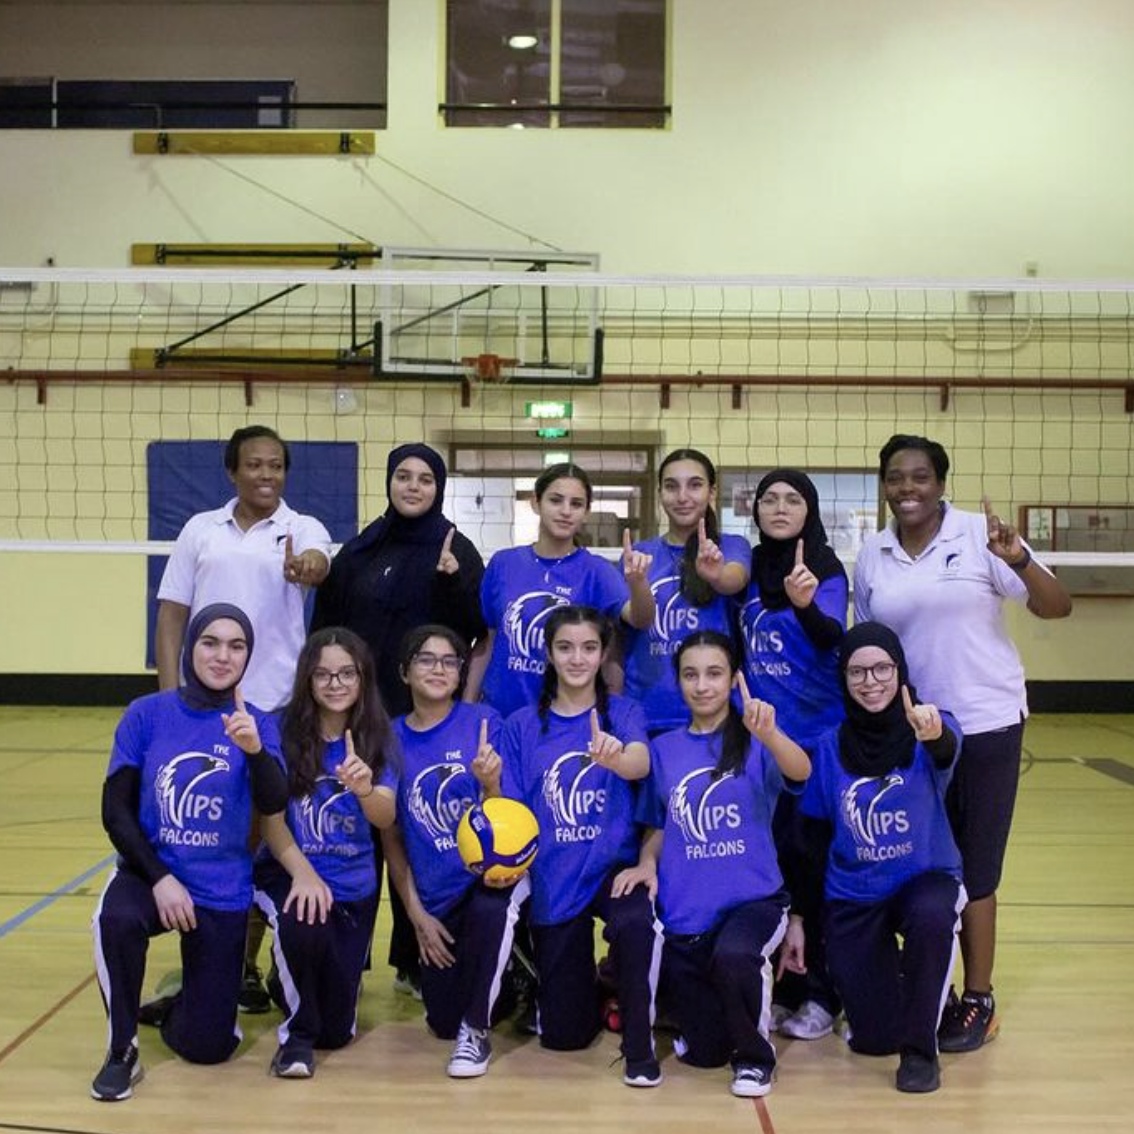 IPS Girls' volleyball team